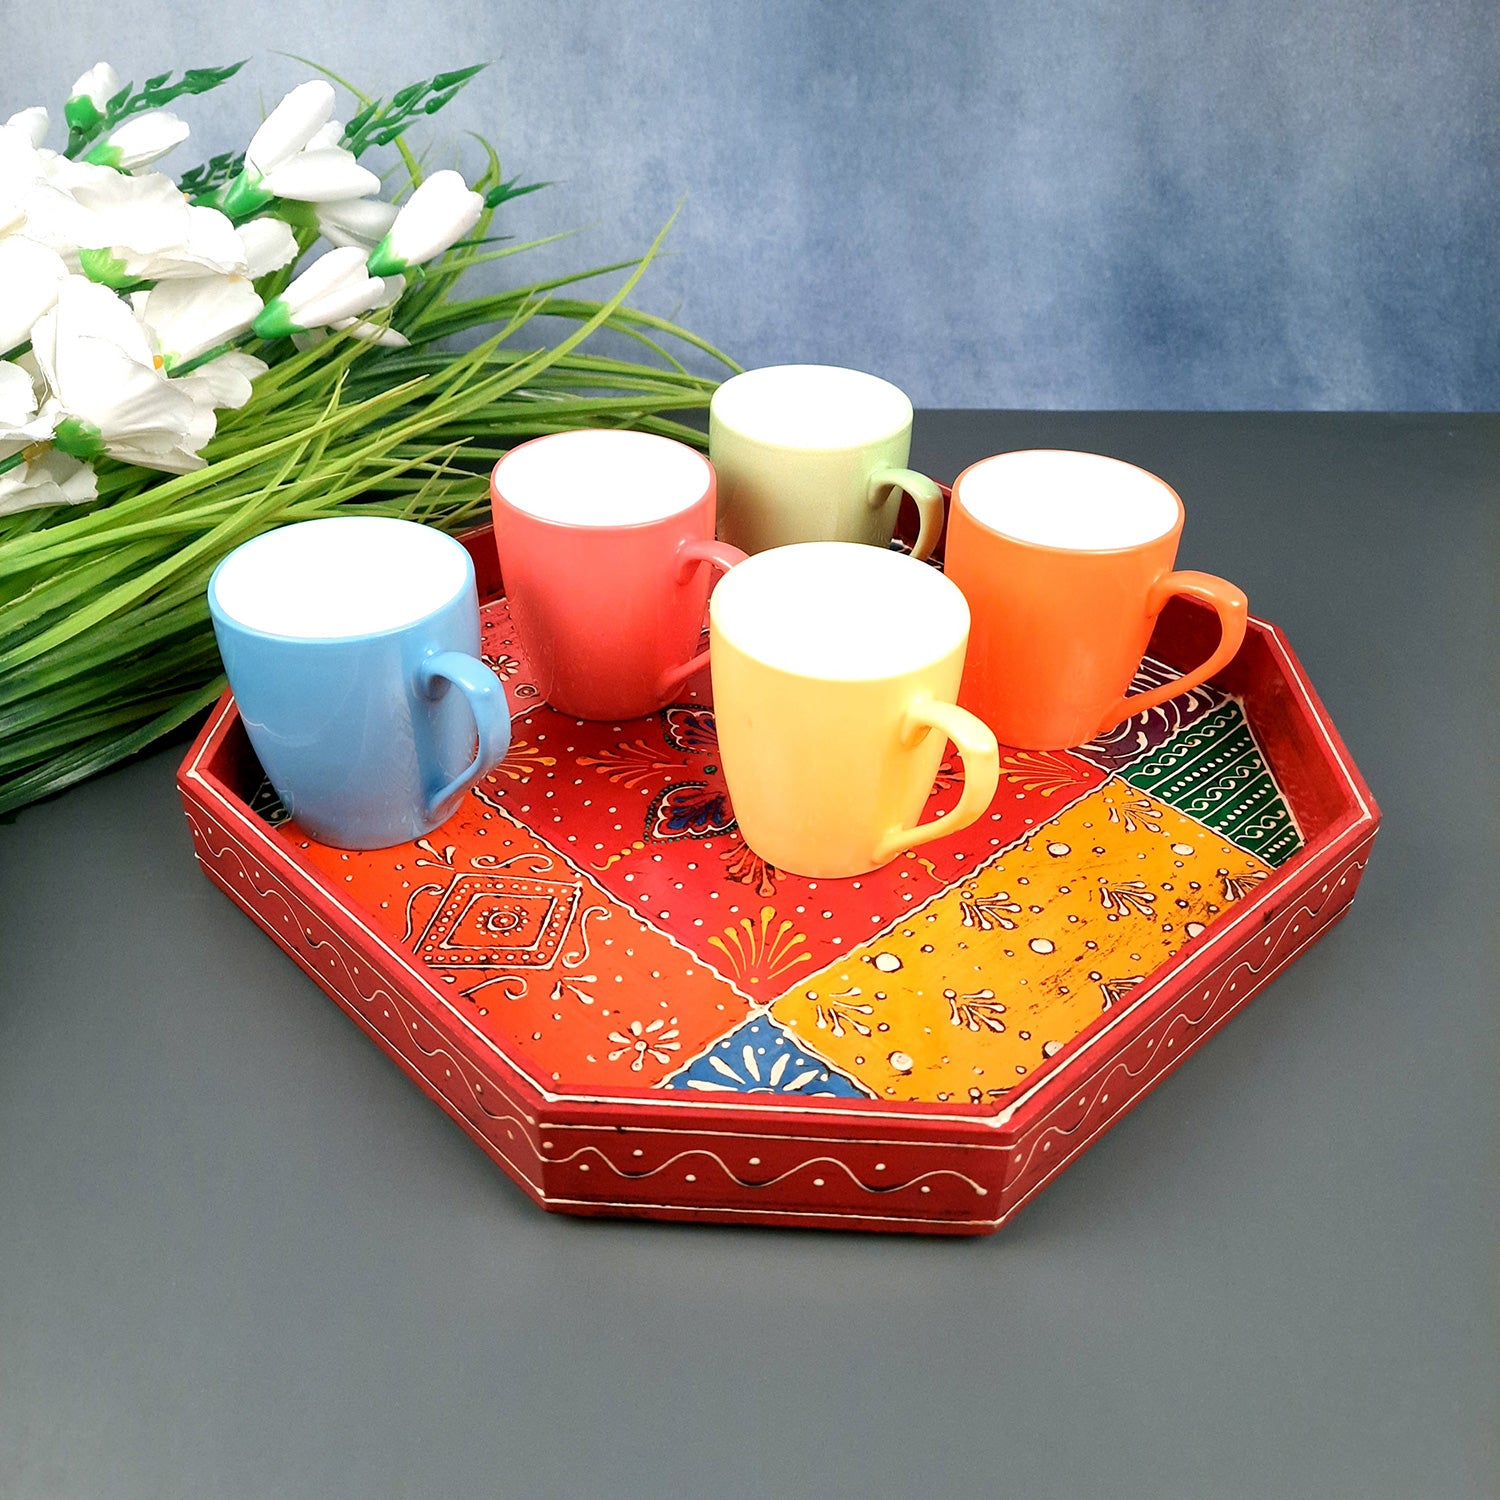 Serving Tray Wooden | Tea & Snacks Serving Platter - for Home, Dining Table, Kitchen Decor | Wedding & Housewarming Gift (Set of 3)- Apkamart